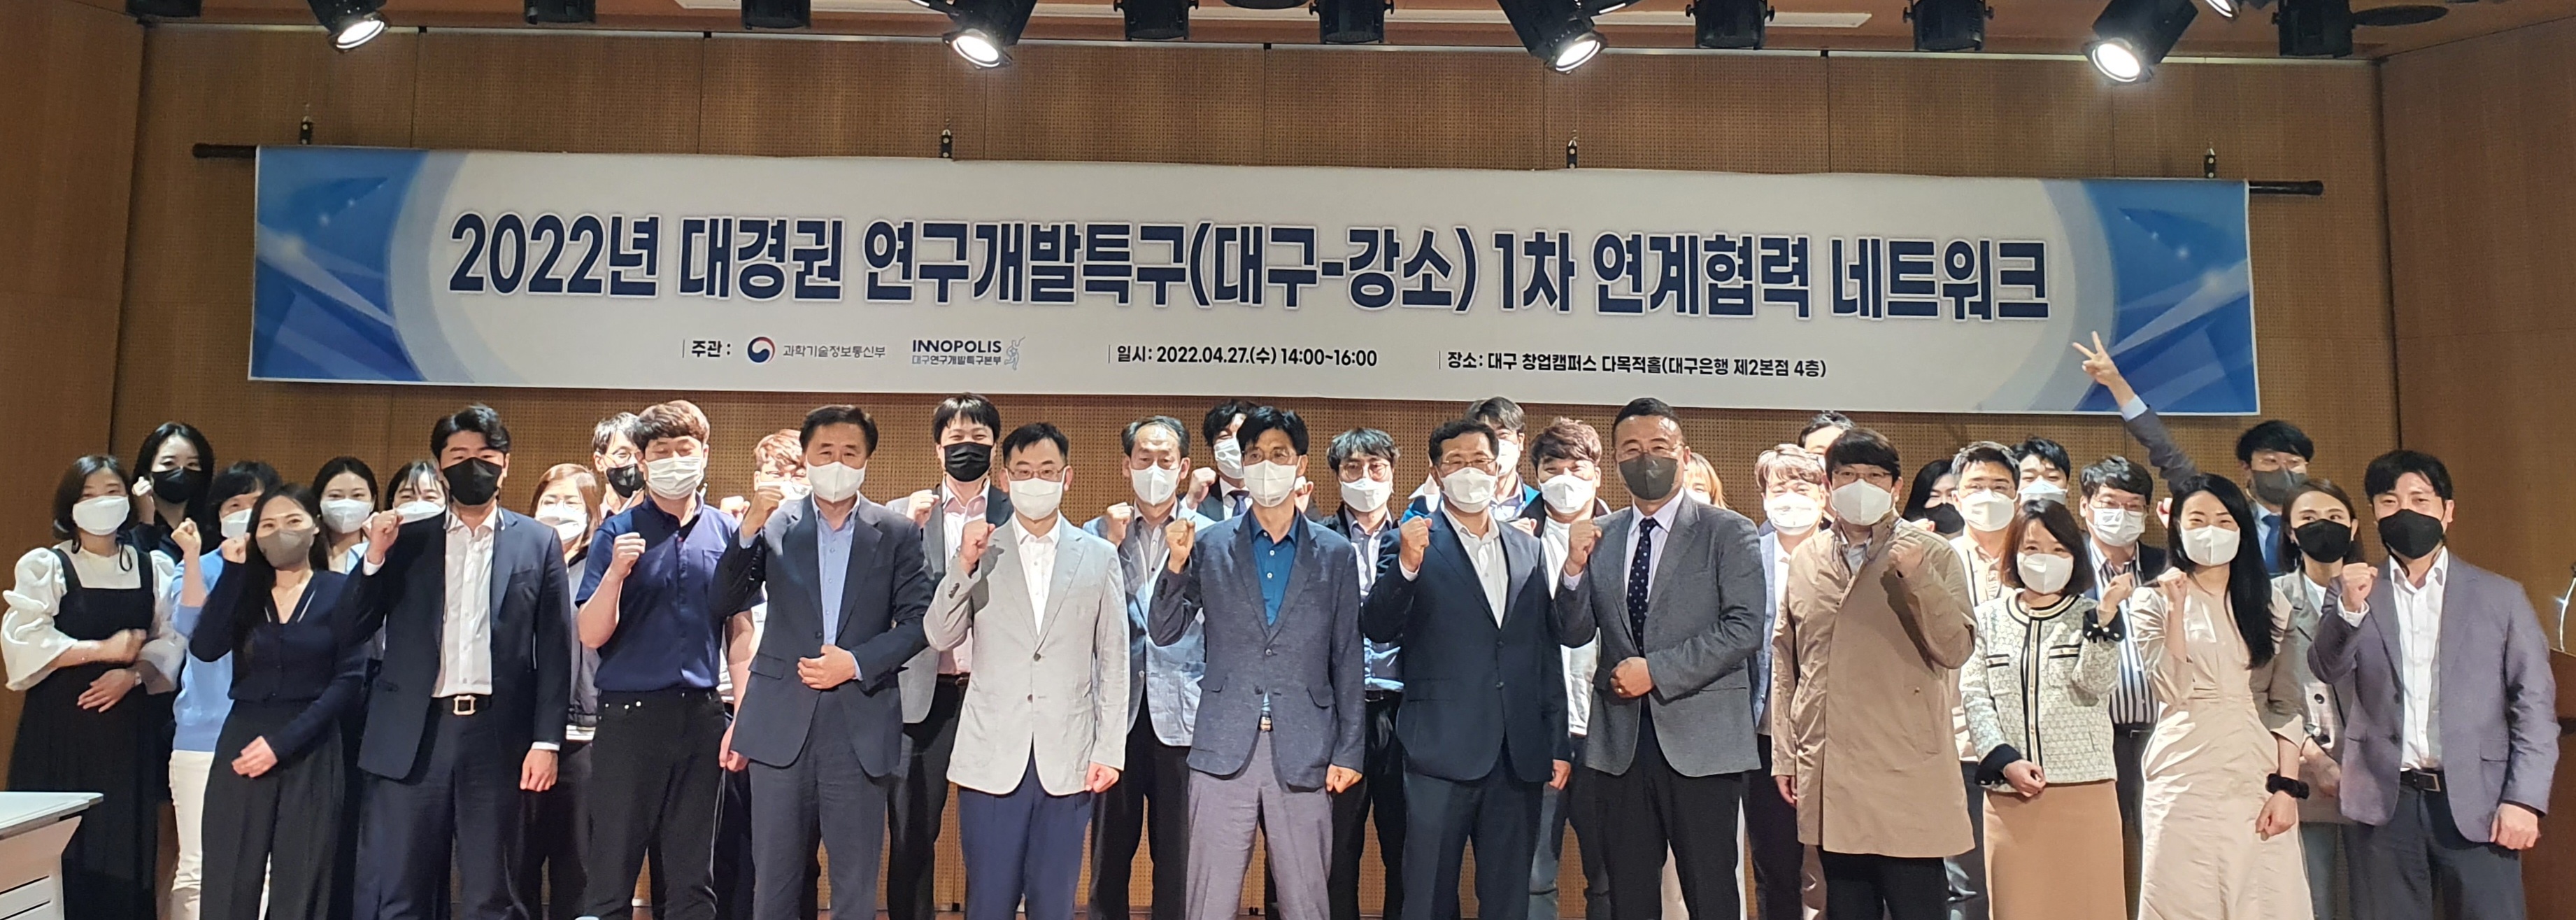 Korea Innovation Foundation hosted the Daegu Small Hidden Champion INNOPOLIS cooperative network to develop the Daegu-Gyeongbuk area.